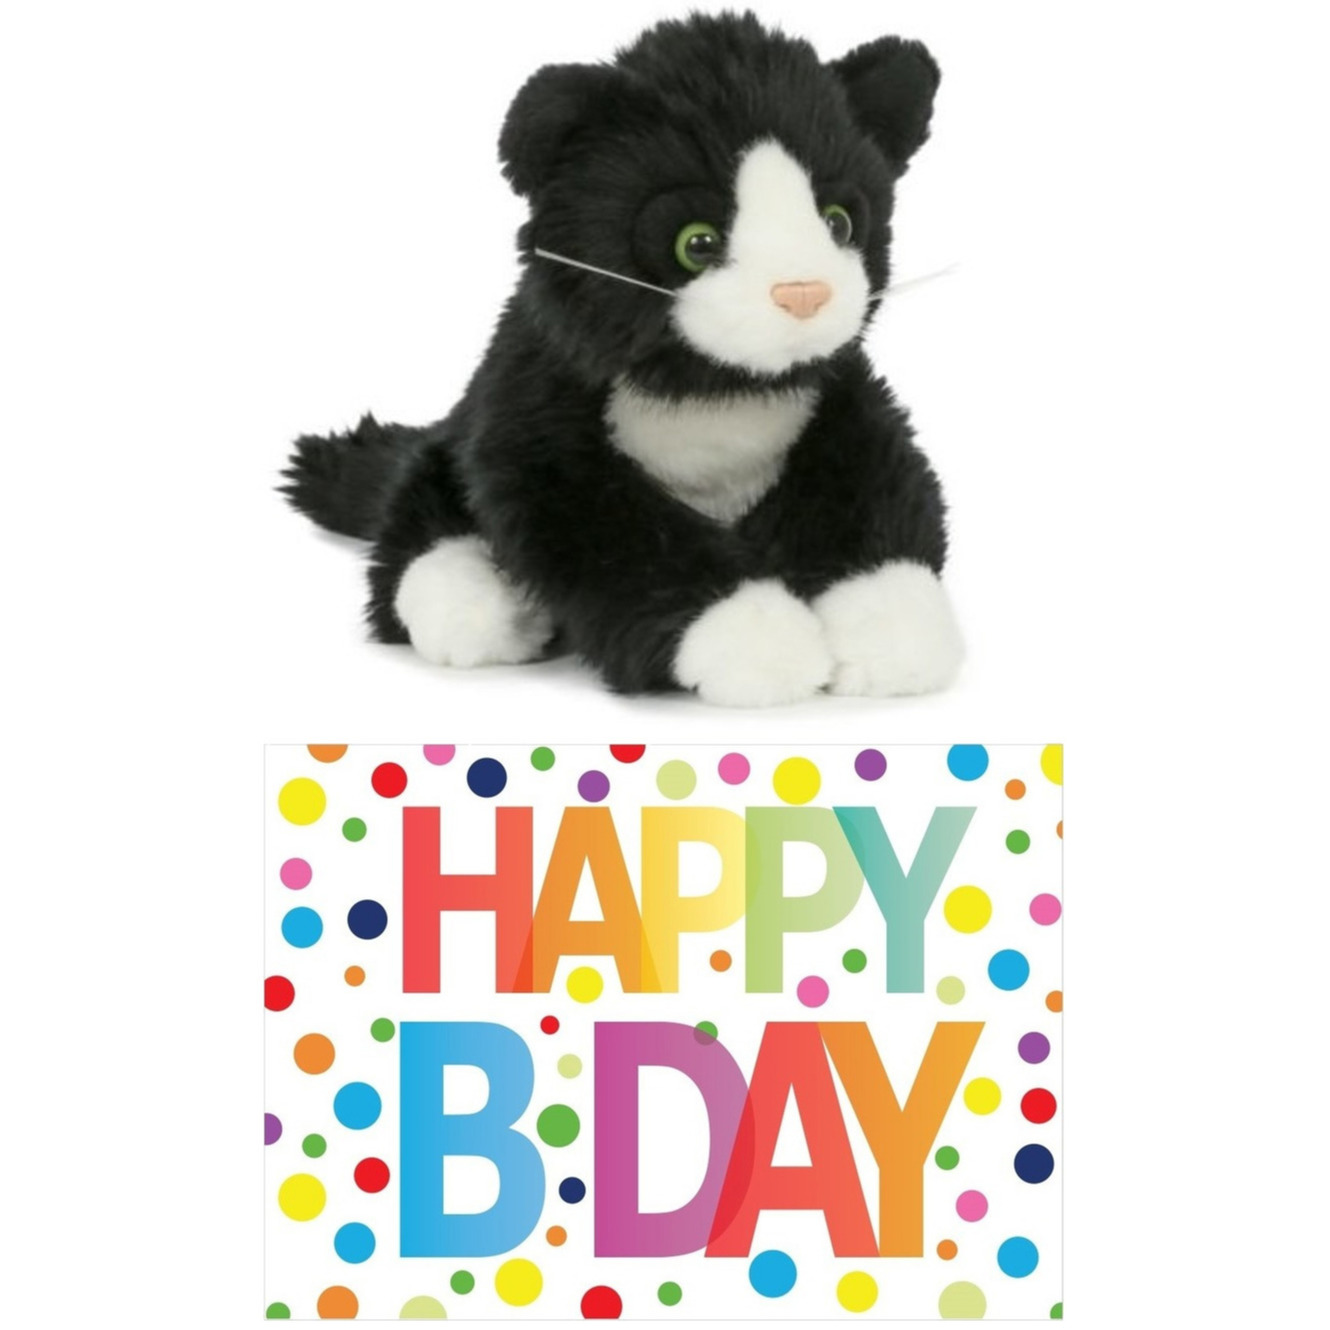 Cadeau setje pluche zwart/witte kat/poes knuffel 18 cm met Happy Birthday wenskaart